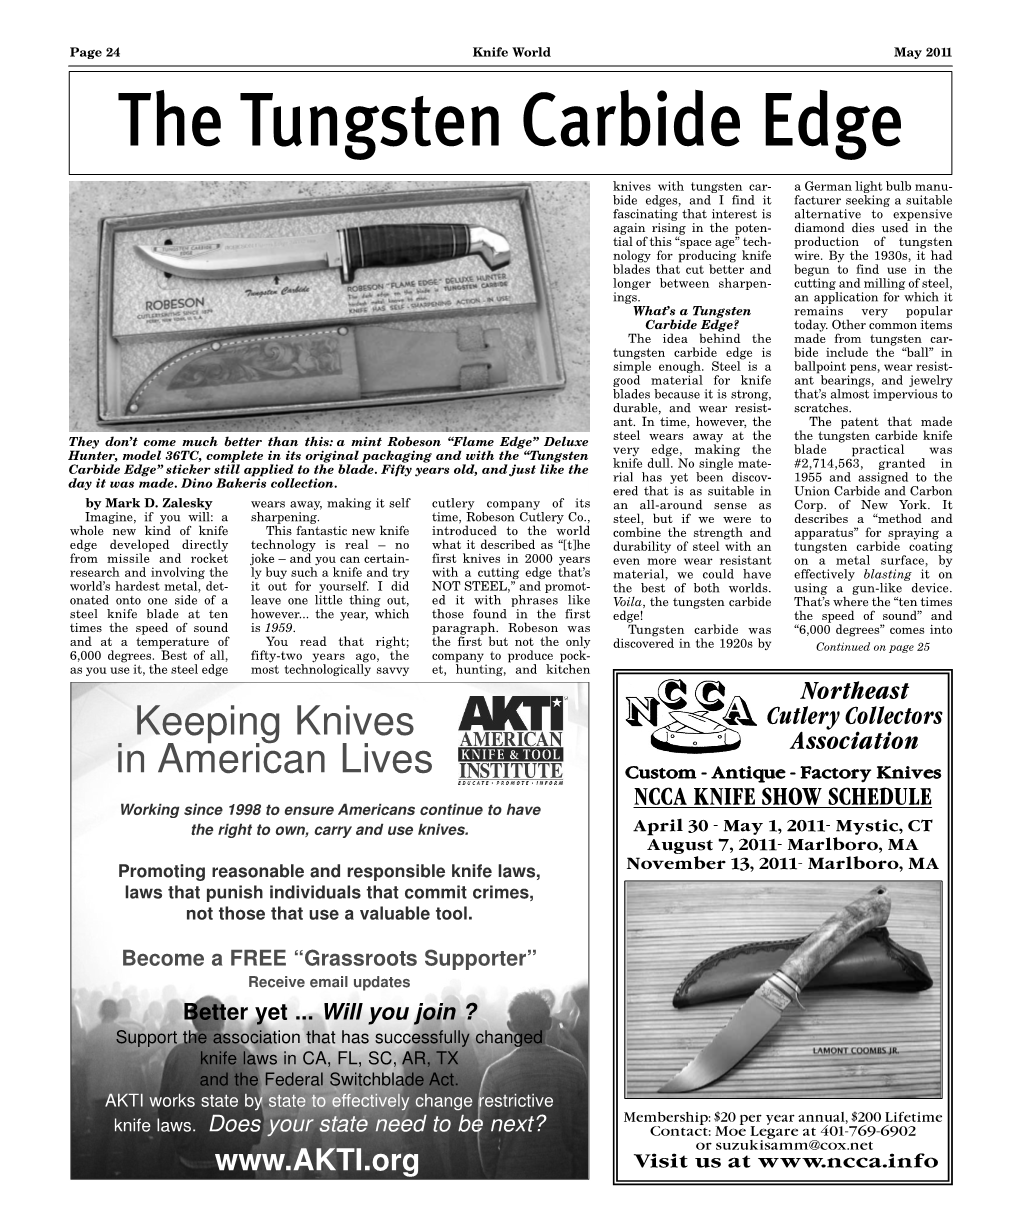 The Tungsten Carbide Edge